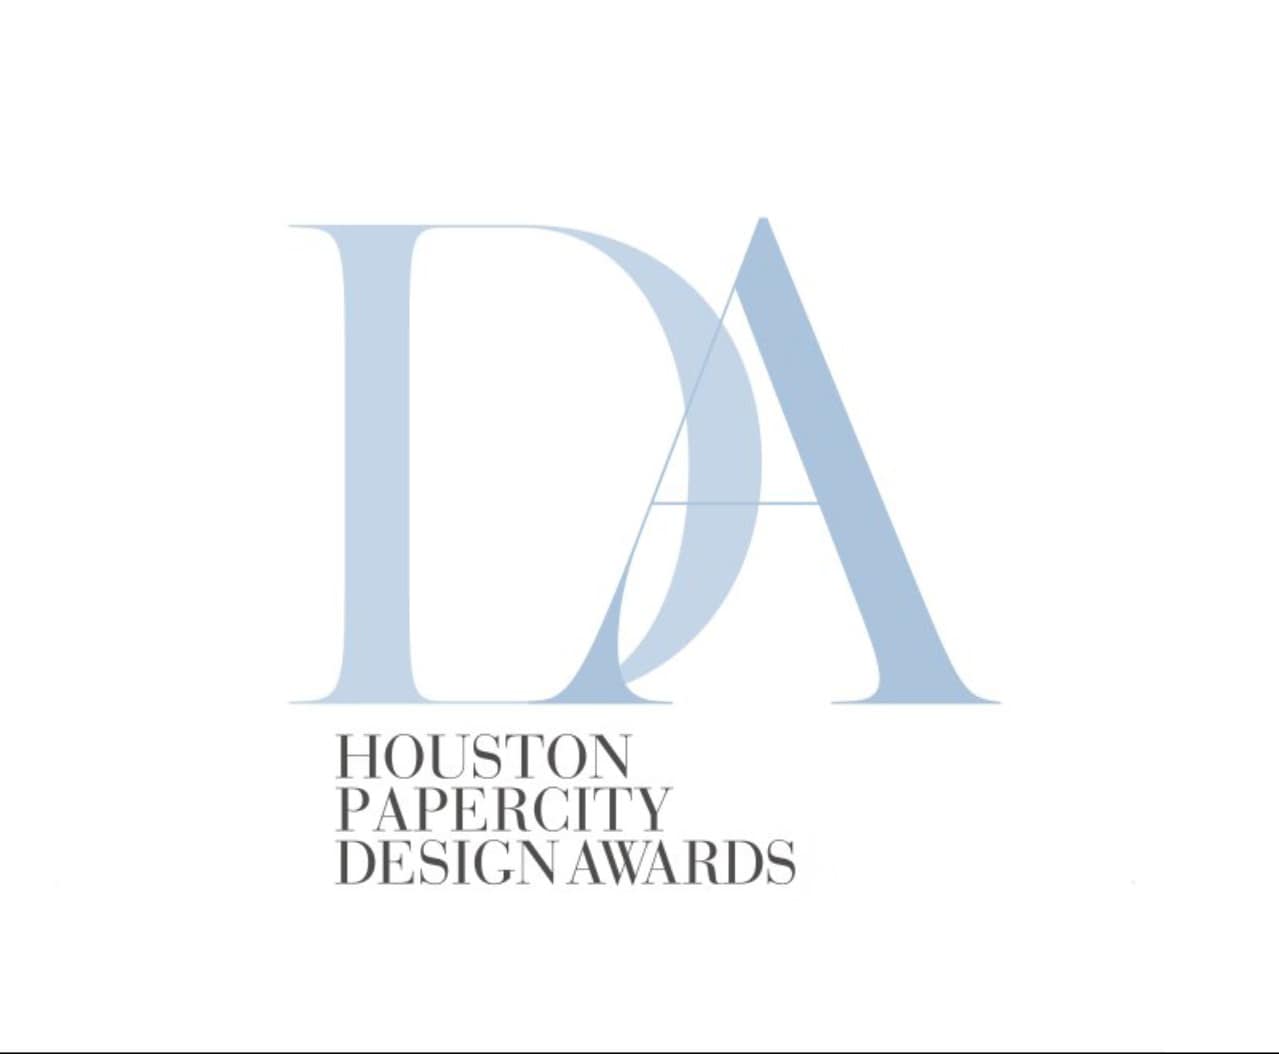 PaperCity Design Awards Houston 2019